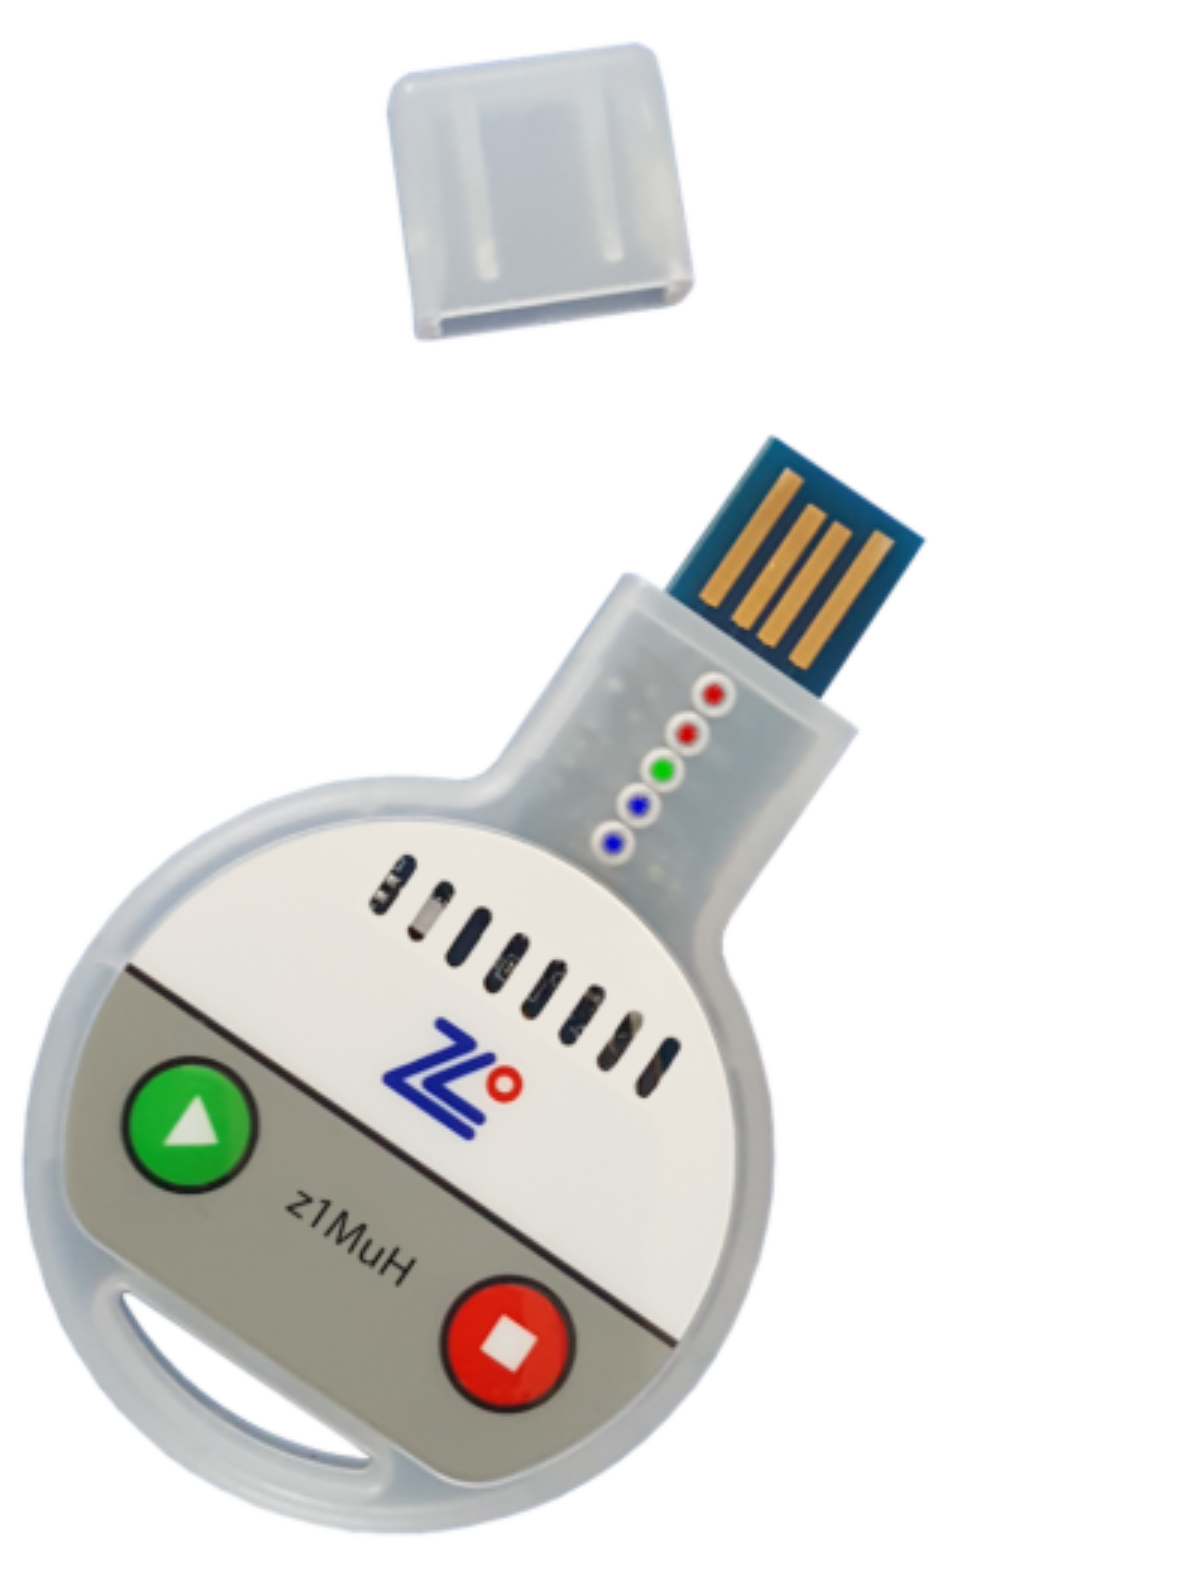 USB Thermometer Temperature Sensor Data Logger Recorder for PC Laptop  White-GOLDEN BLUE